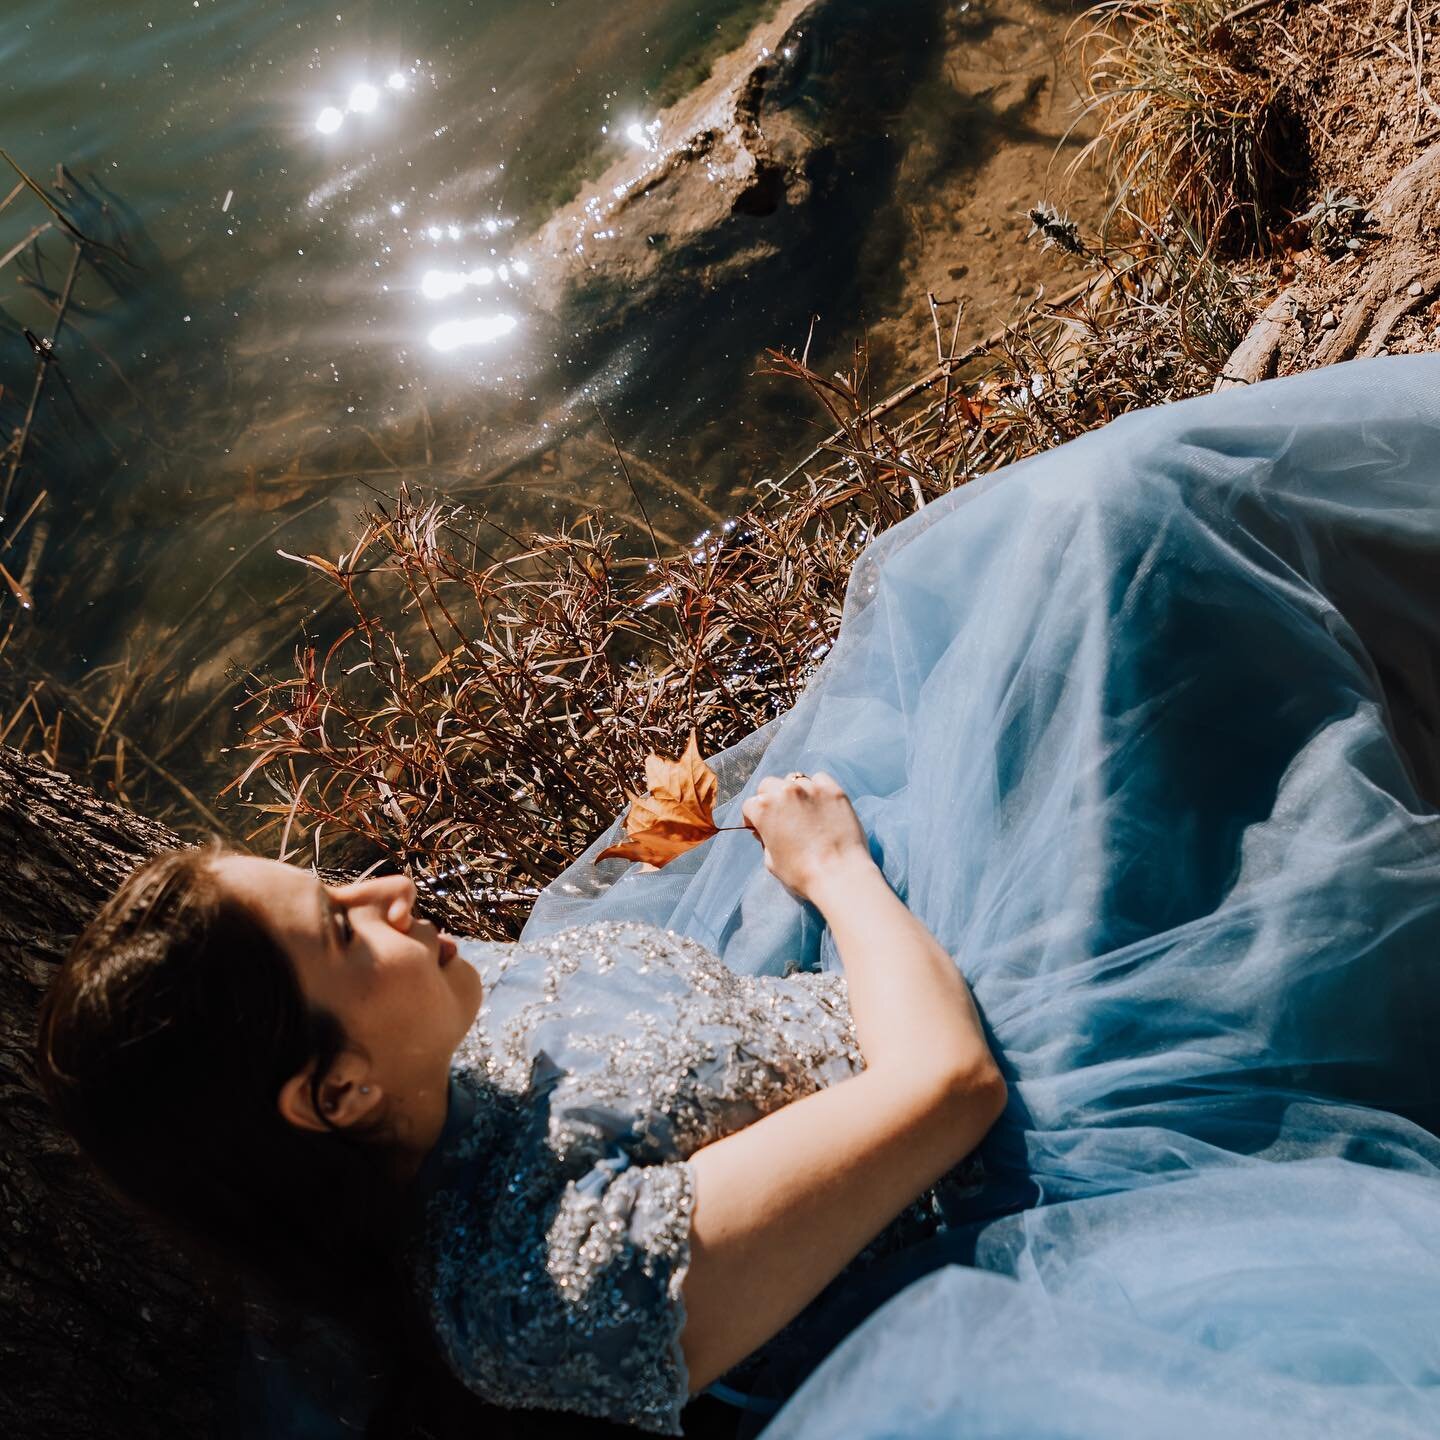 Daydreaming of sitting by the river.
💙
🤍
💙
🤍
💙
#austin #coloradoriver #wonder #atxphotographer #txphotographer  #sittingbytheriver #soakinginthesun #wonderland